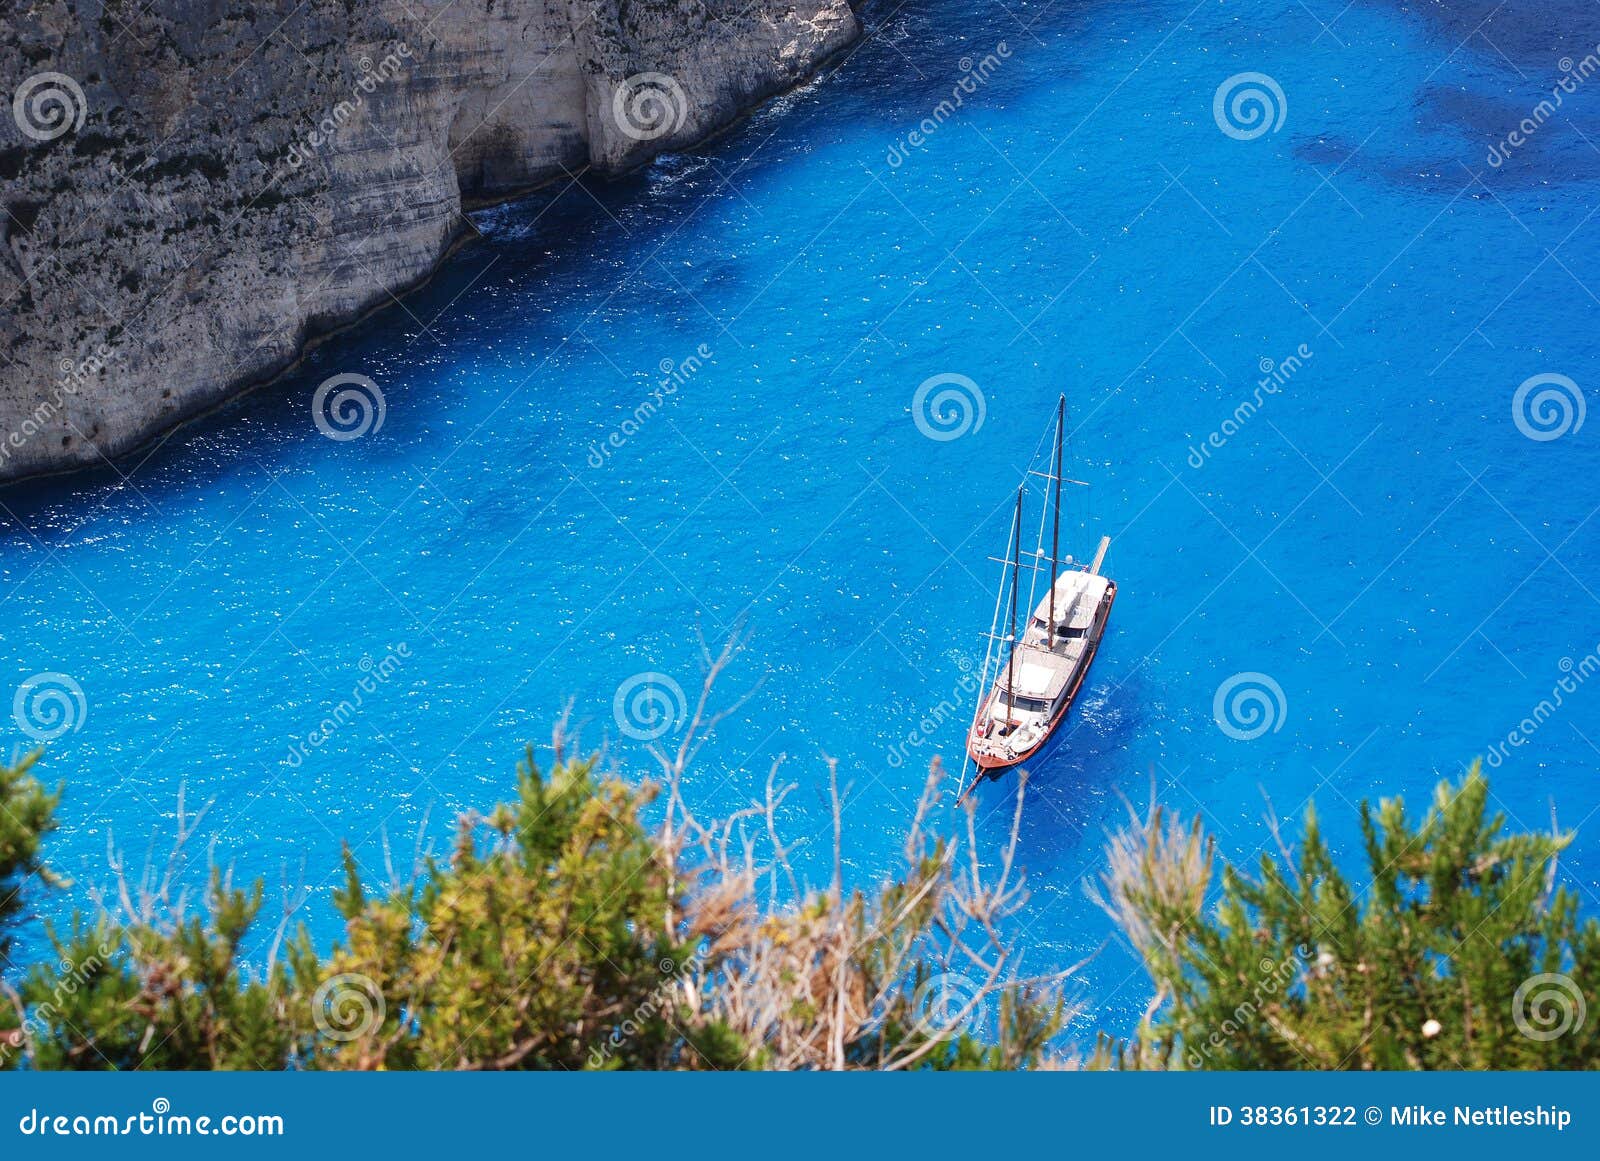 a view of the sea on the coast of zante greece.